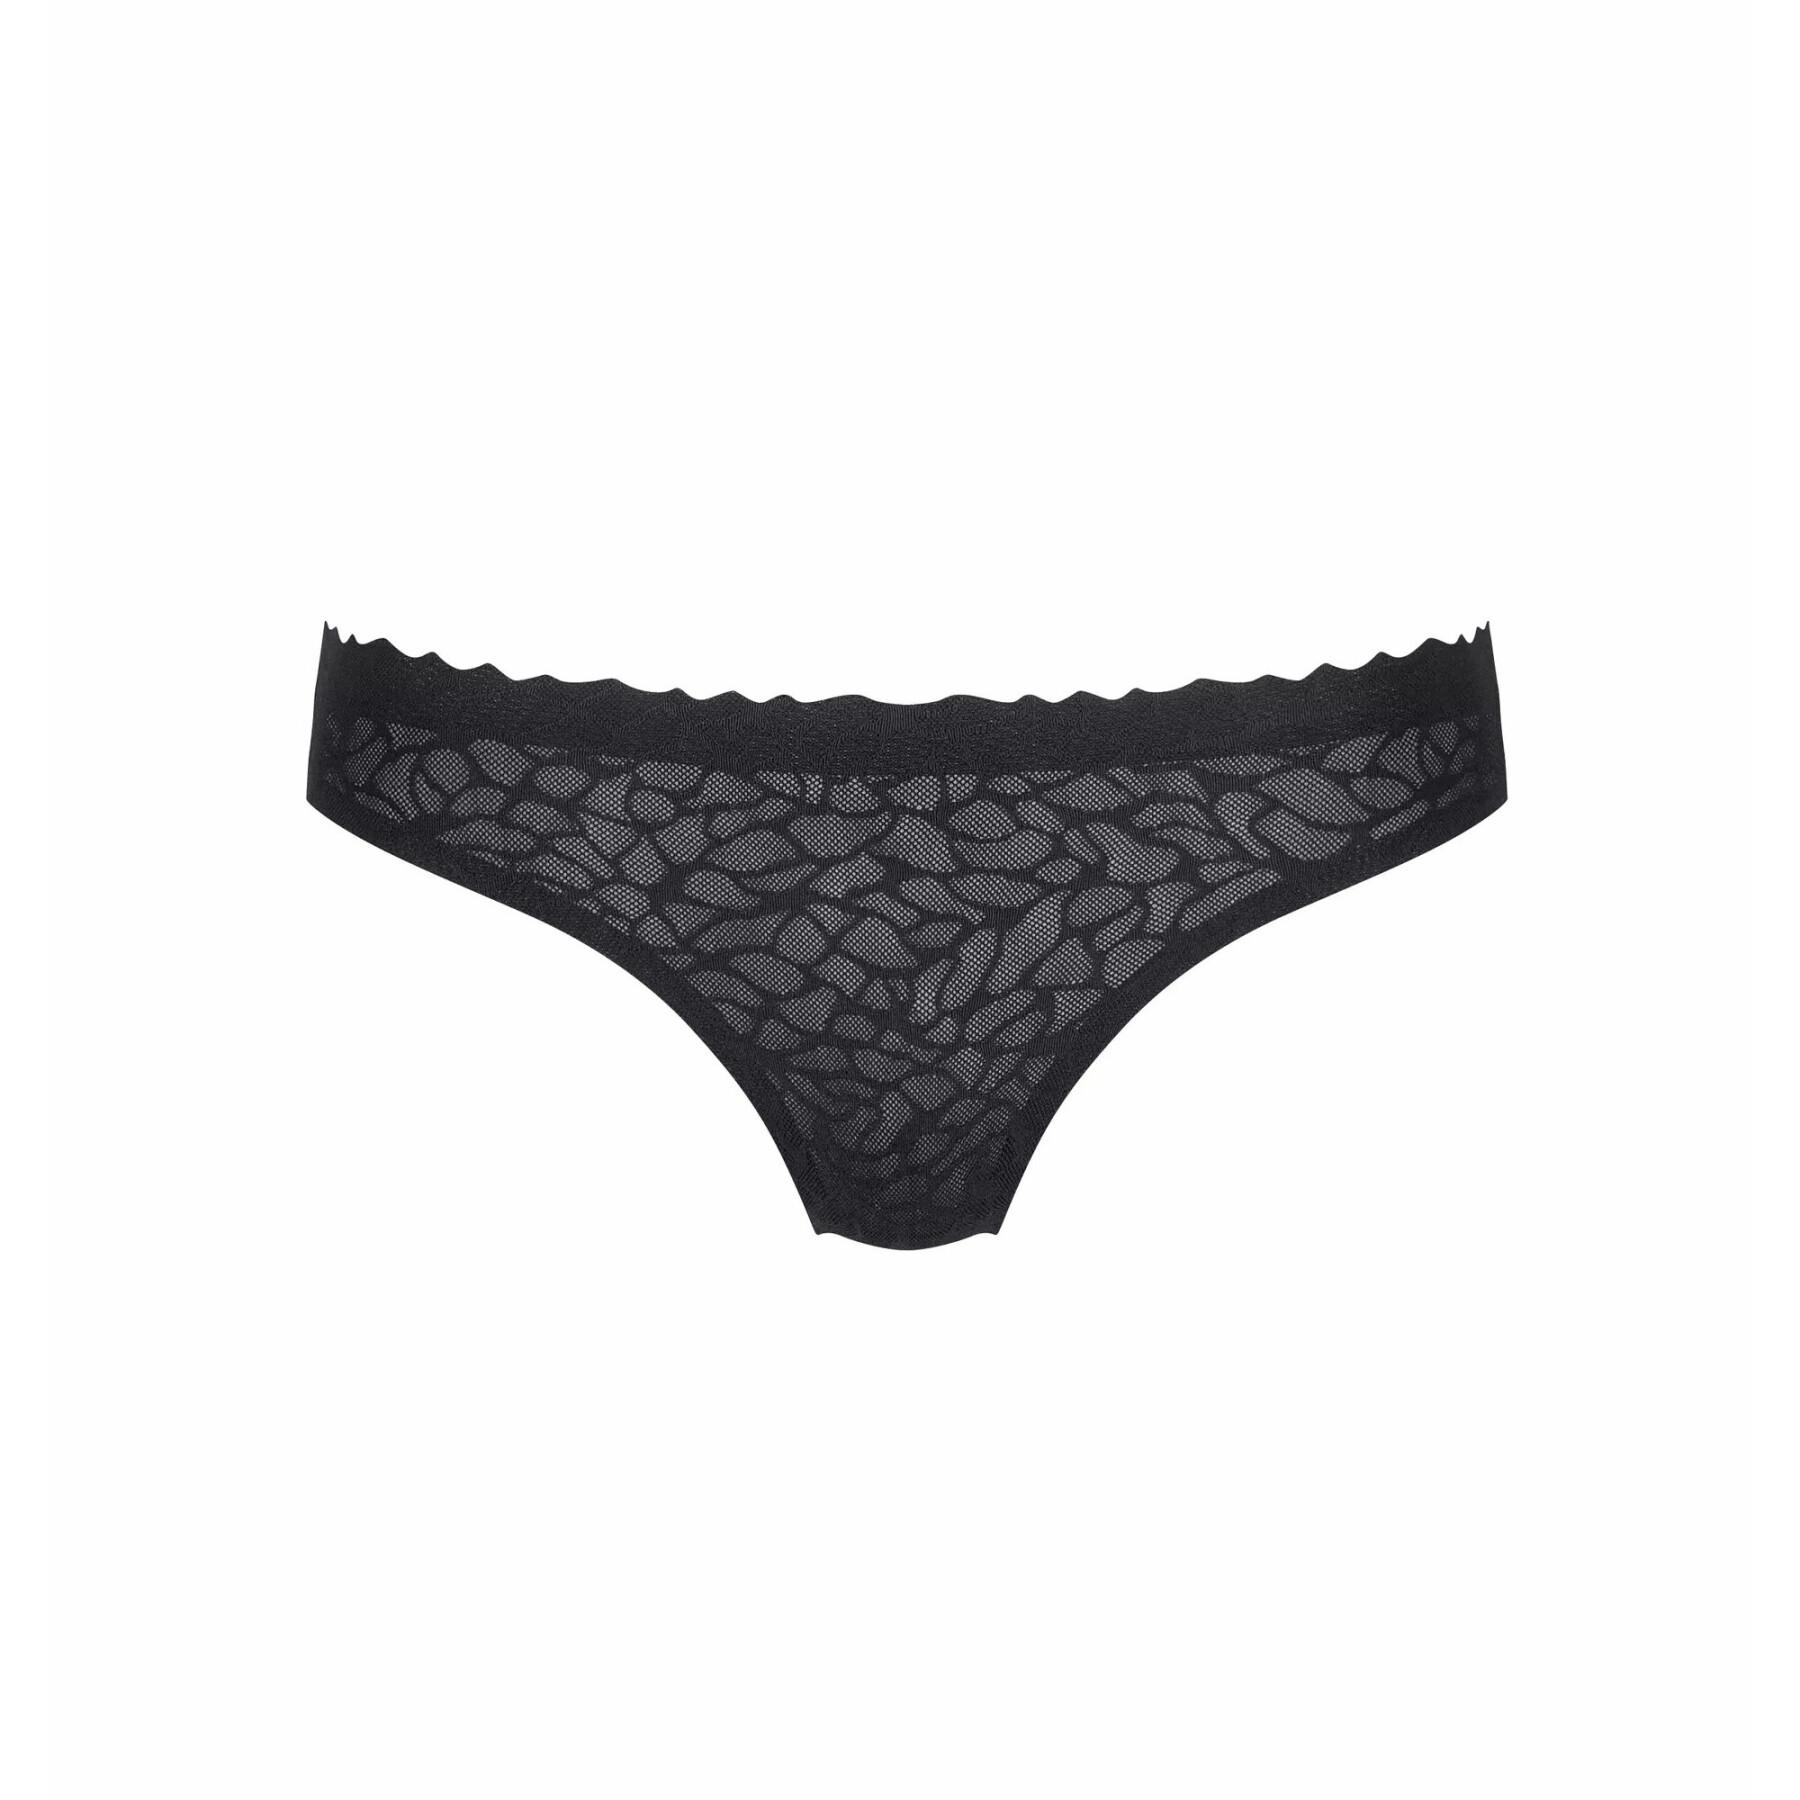 Guess Lace Brazilian Briefs-Black - Underwear - Accessories - Women